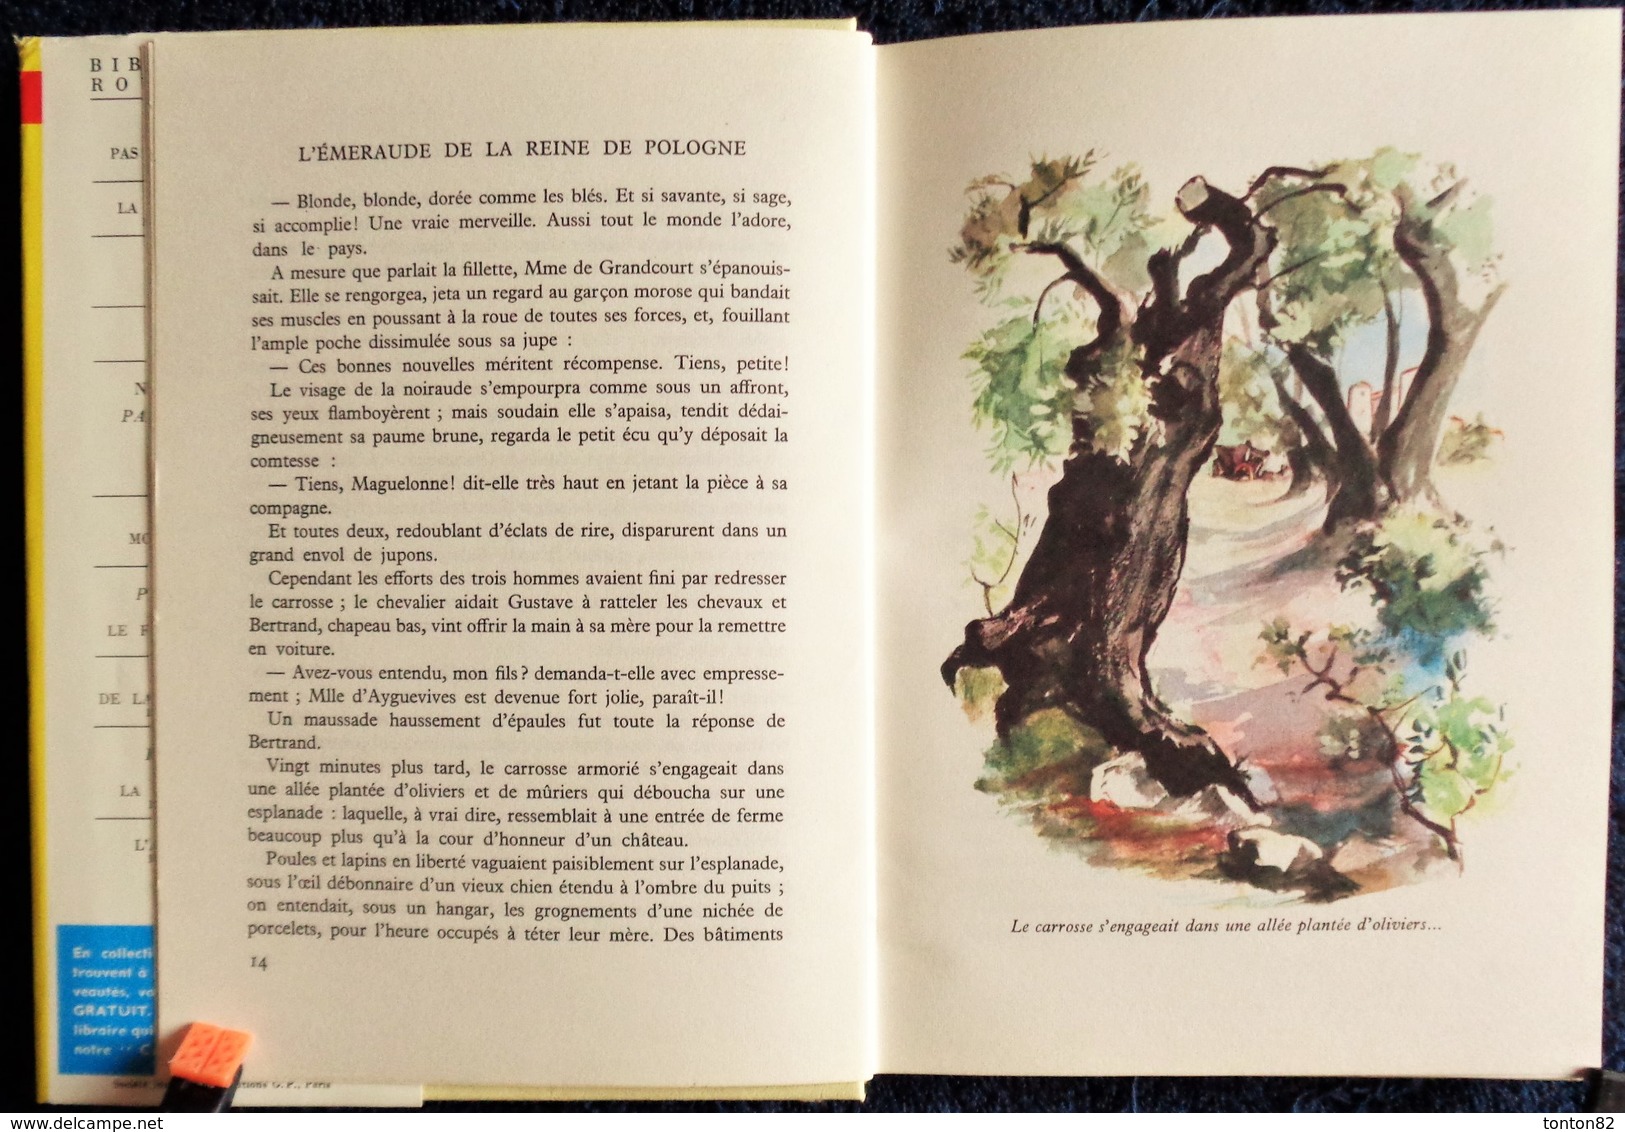 Anne Clairac - La Robe D'Émeraude - Bibliothèque Rouge Et Or N° 637 - ( 1963 ) . - Bibliotheque Rouge Et Or